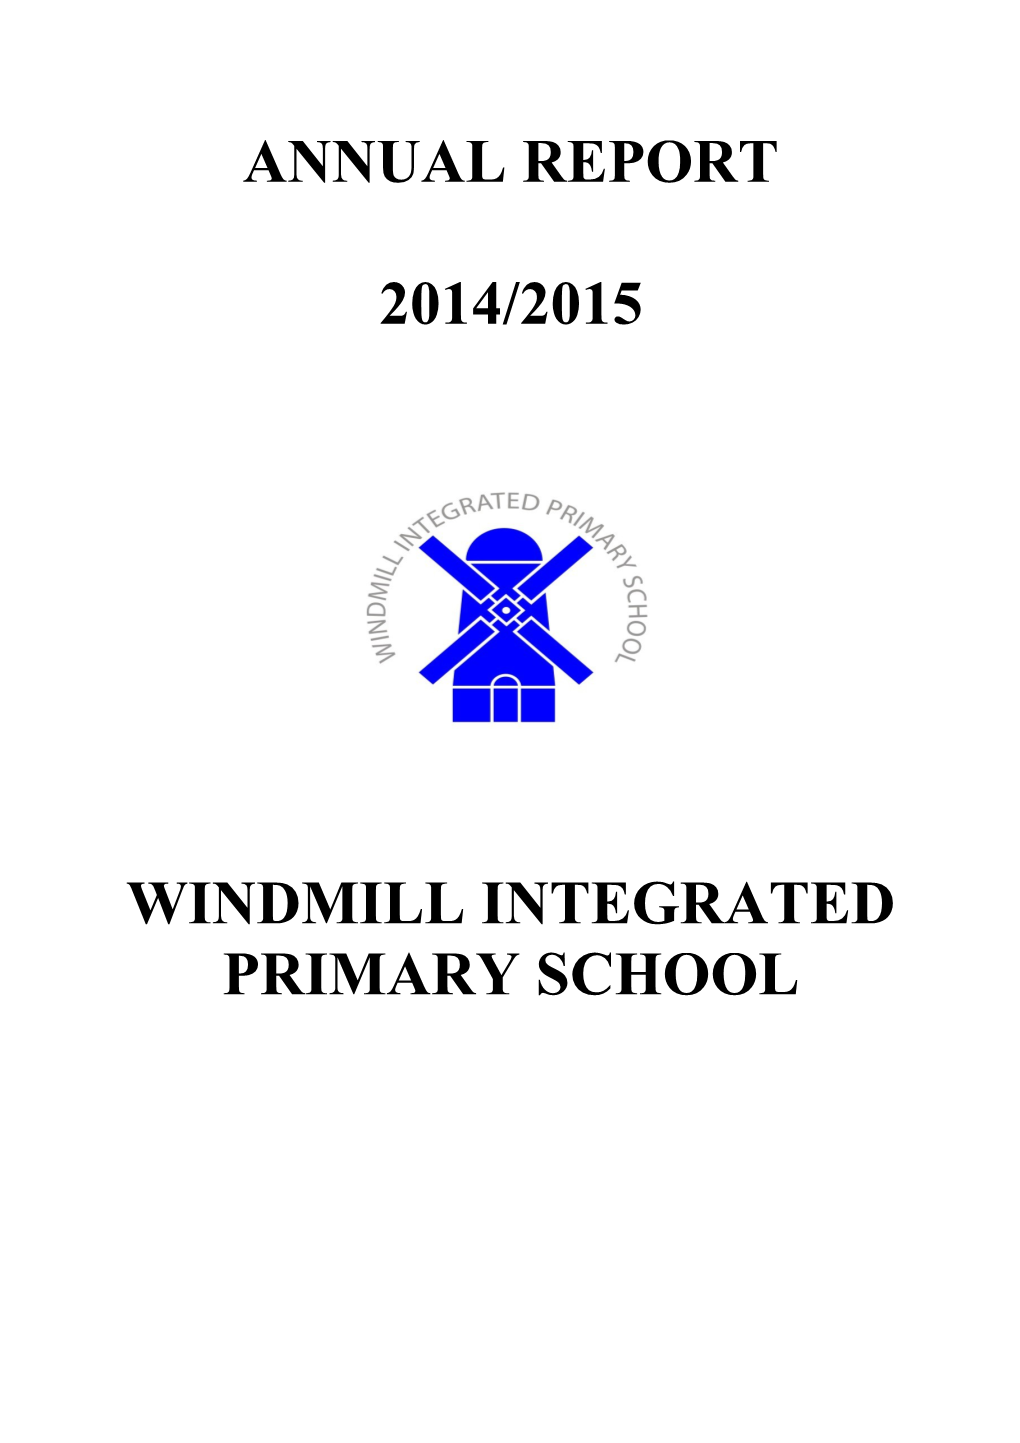 Windmill Integrated